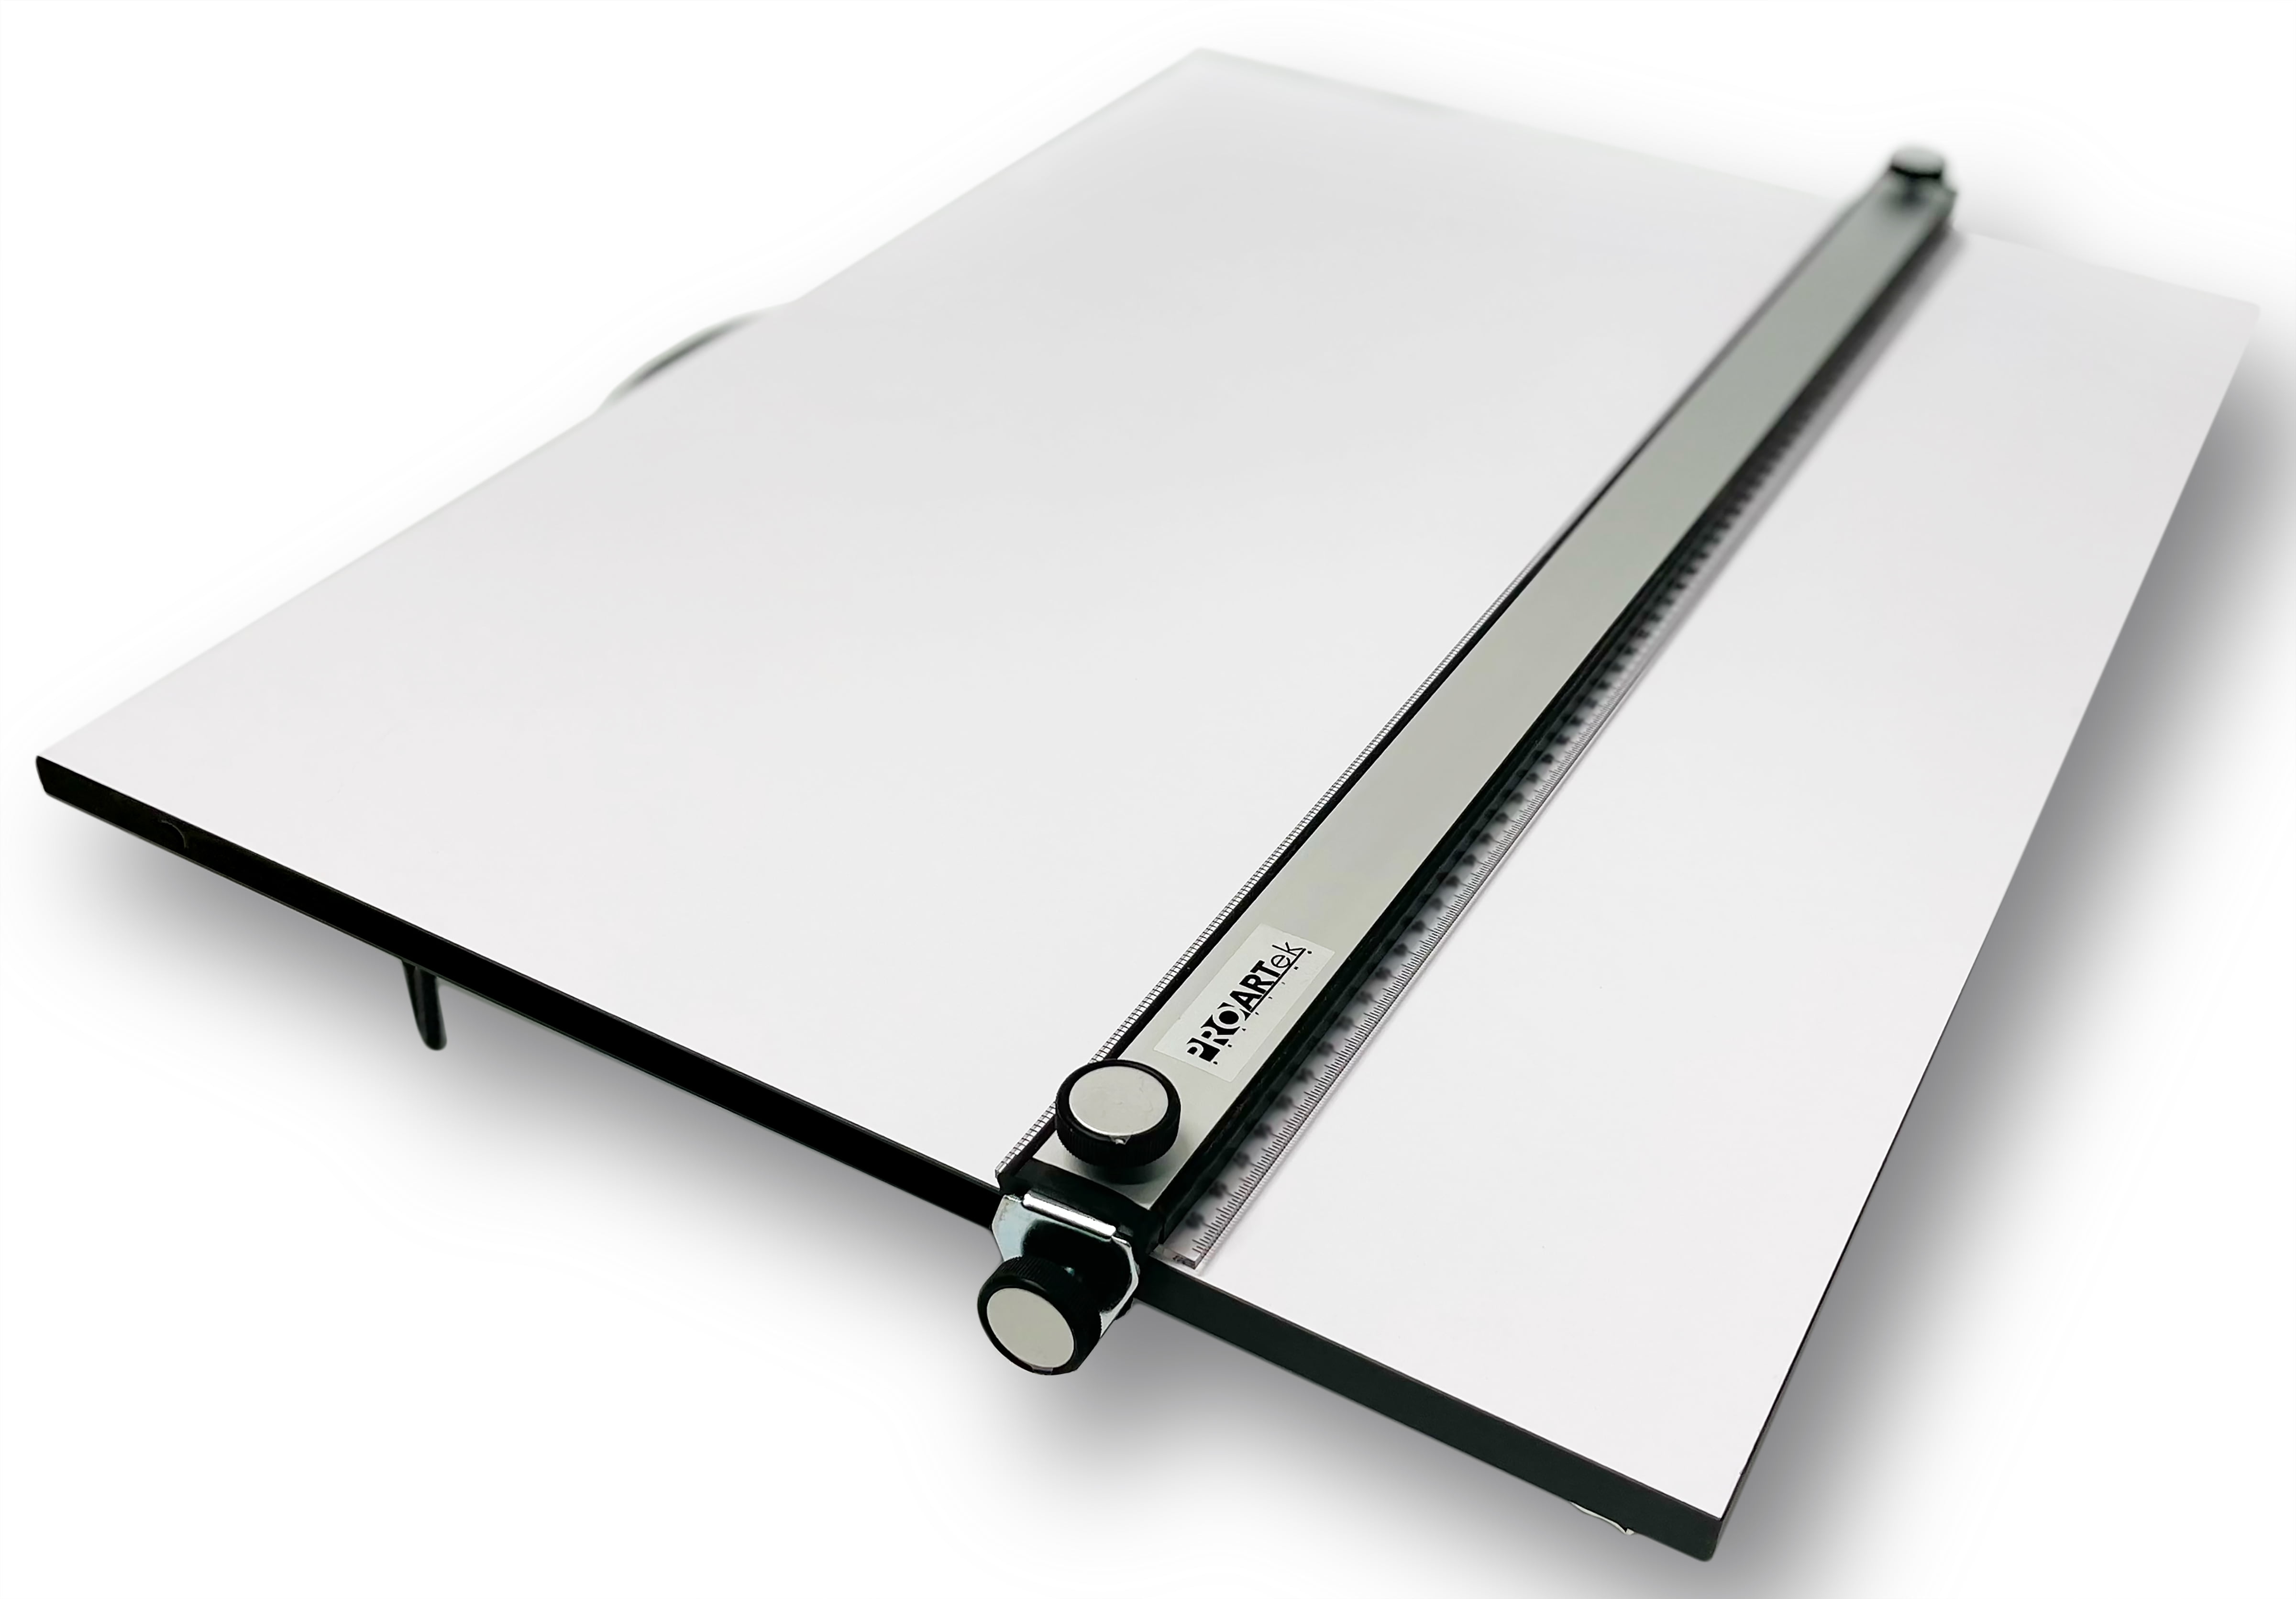 Proartek Drafting PK00015 Model PXB24 Portable Drafting Drawing Board 18 x 24; PXB Series; Adjustable Aluminum Parallel Straightedge, White